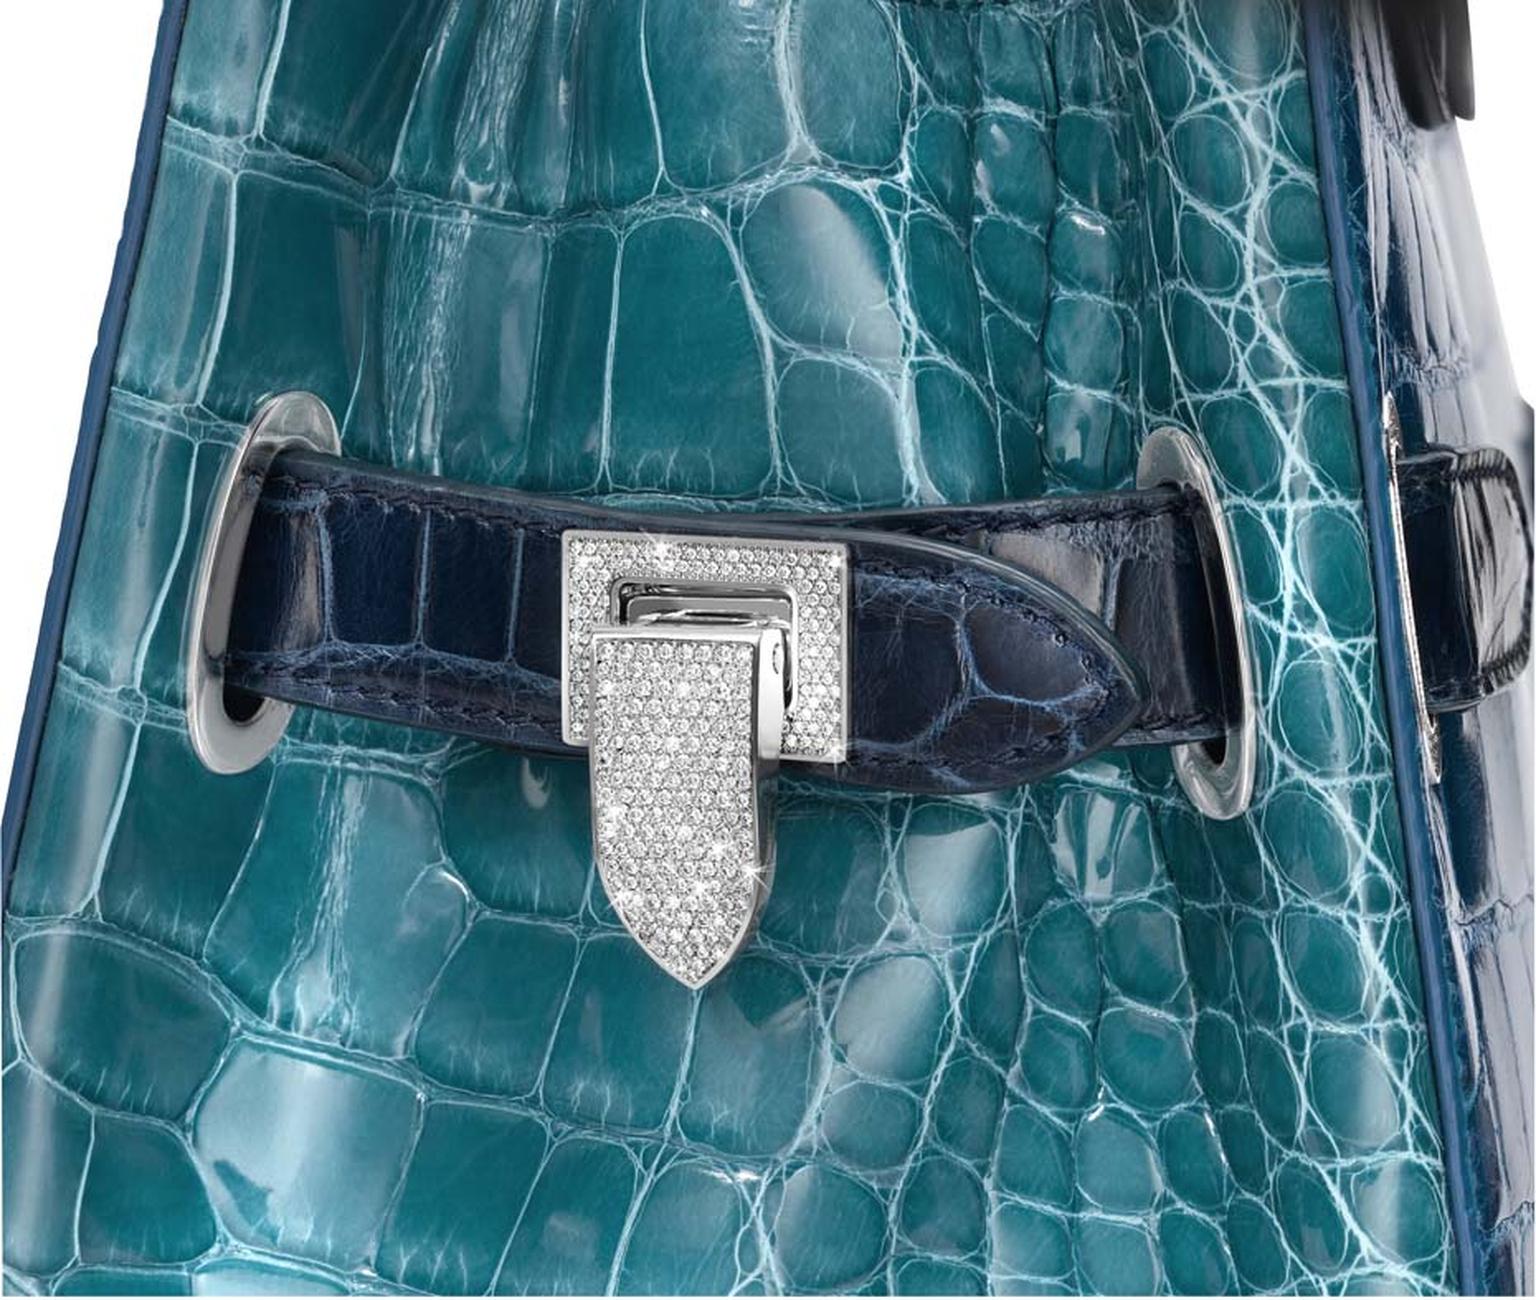 Asprey's 2013 jewel encrusted handbag.